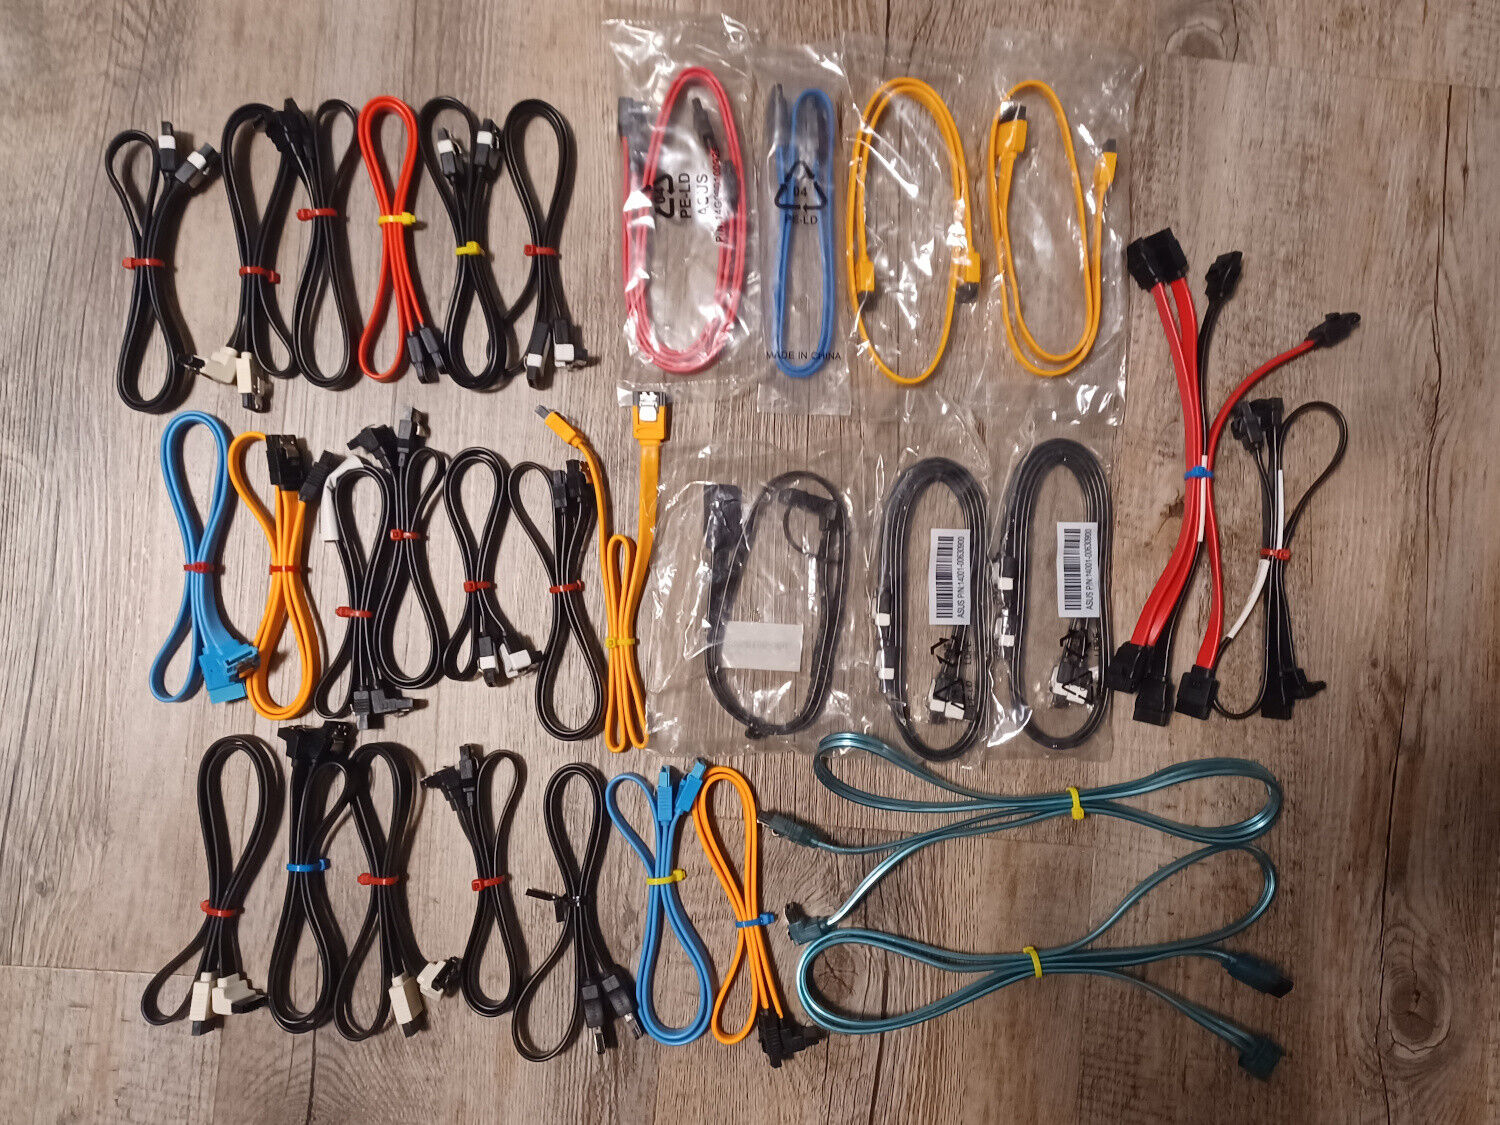 SATA cables lot of 34